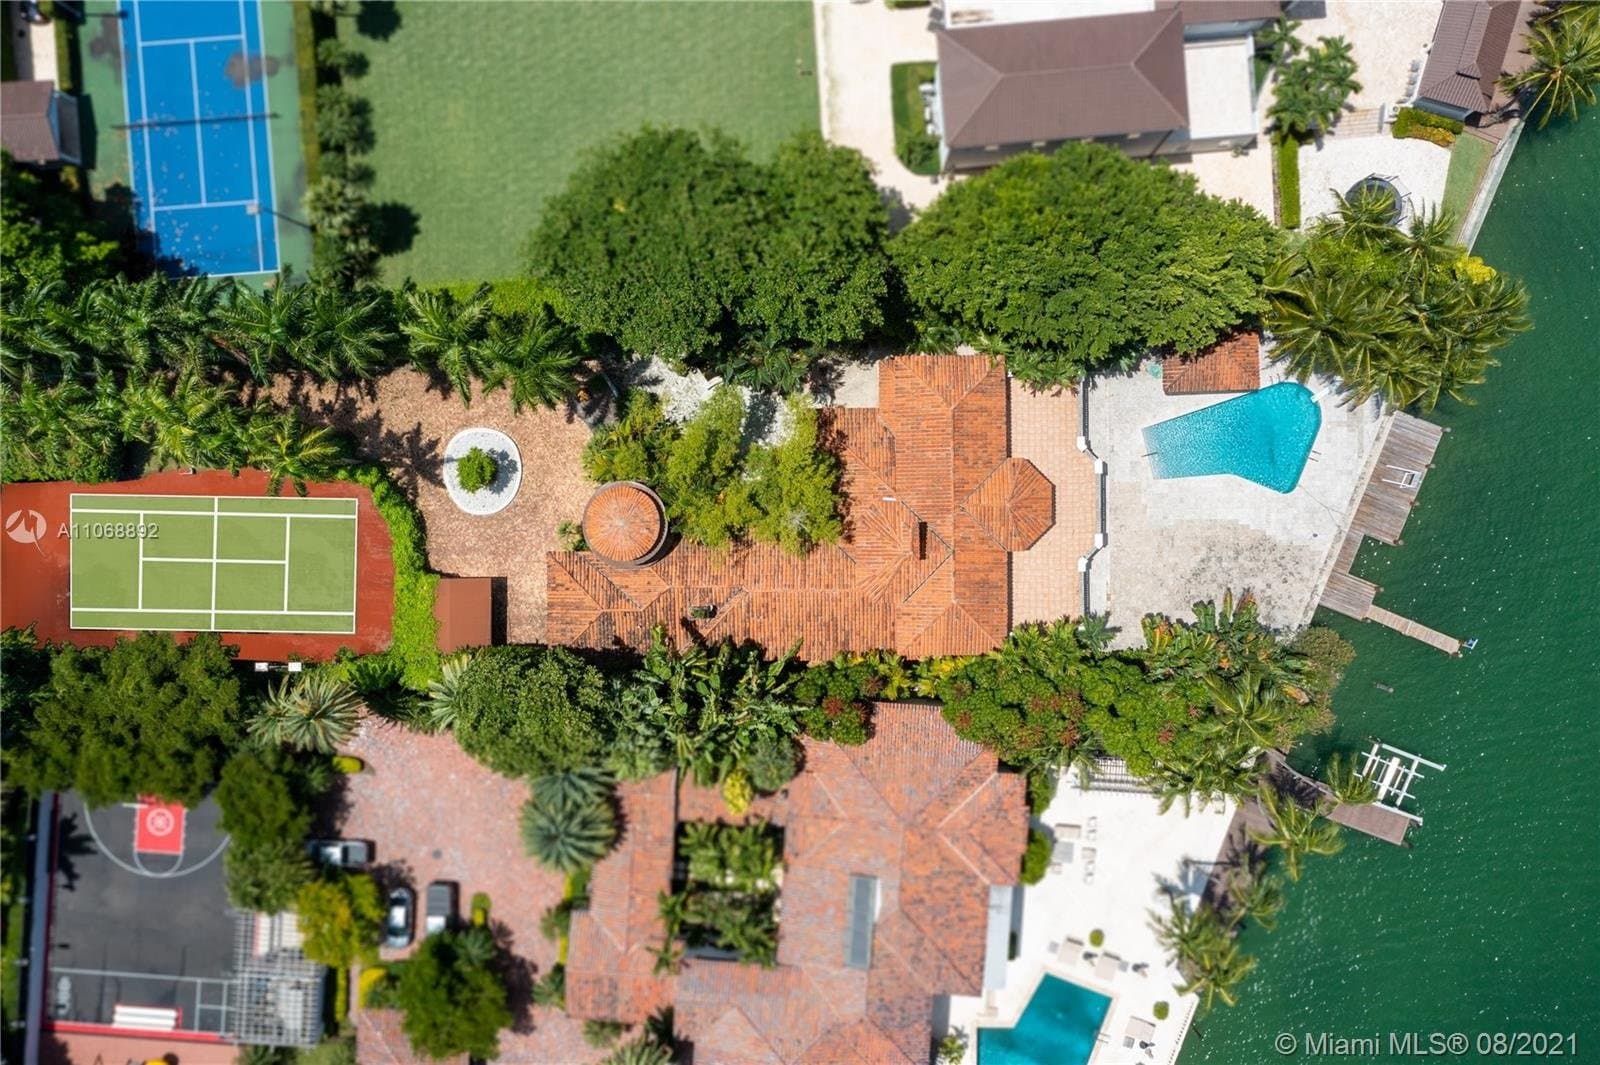   Bedroom Villa For Sale Miami Beach Lp09785 1b1f3cb8ada4500.jpg